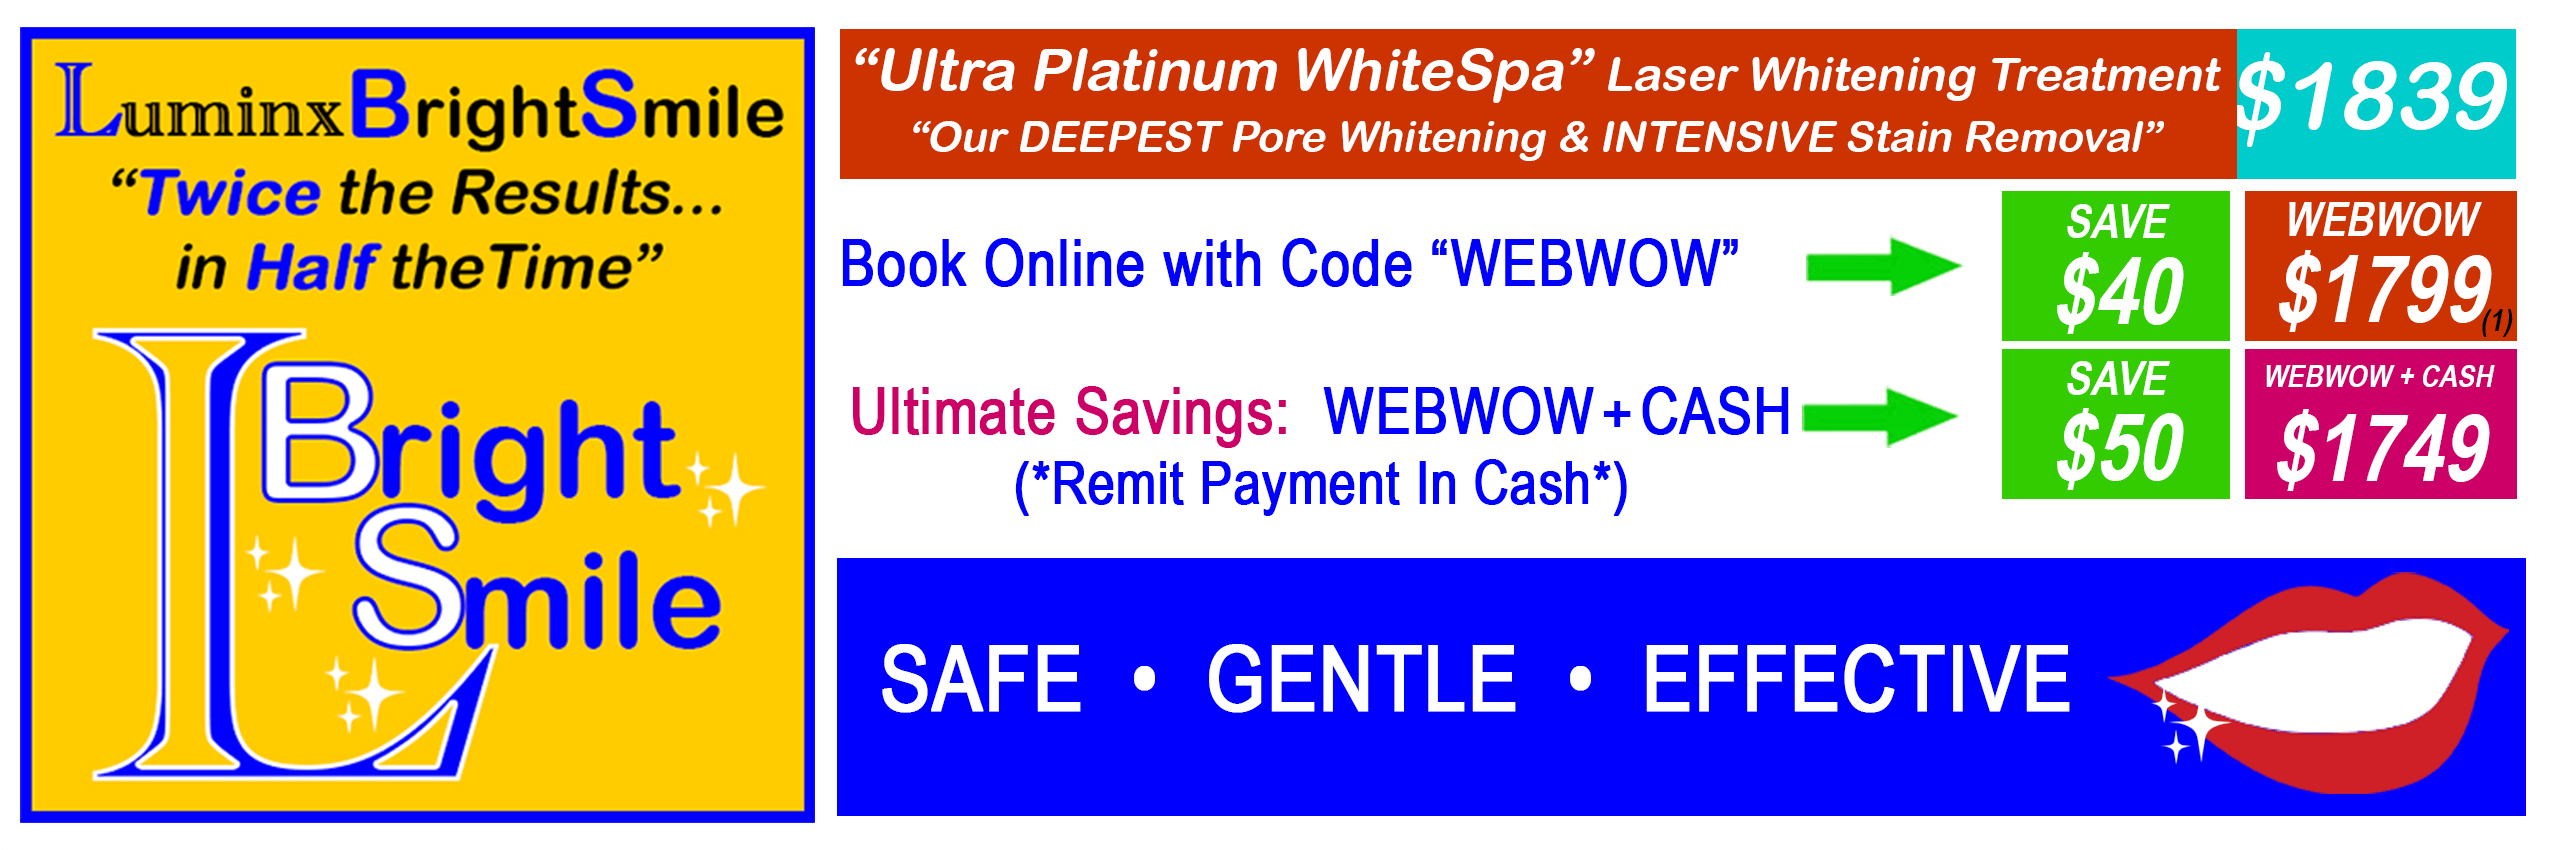 LuminexBrightSmile logo and pricing for Ultra Platinum WhiteSpa Laser Whitening Treatment